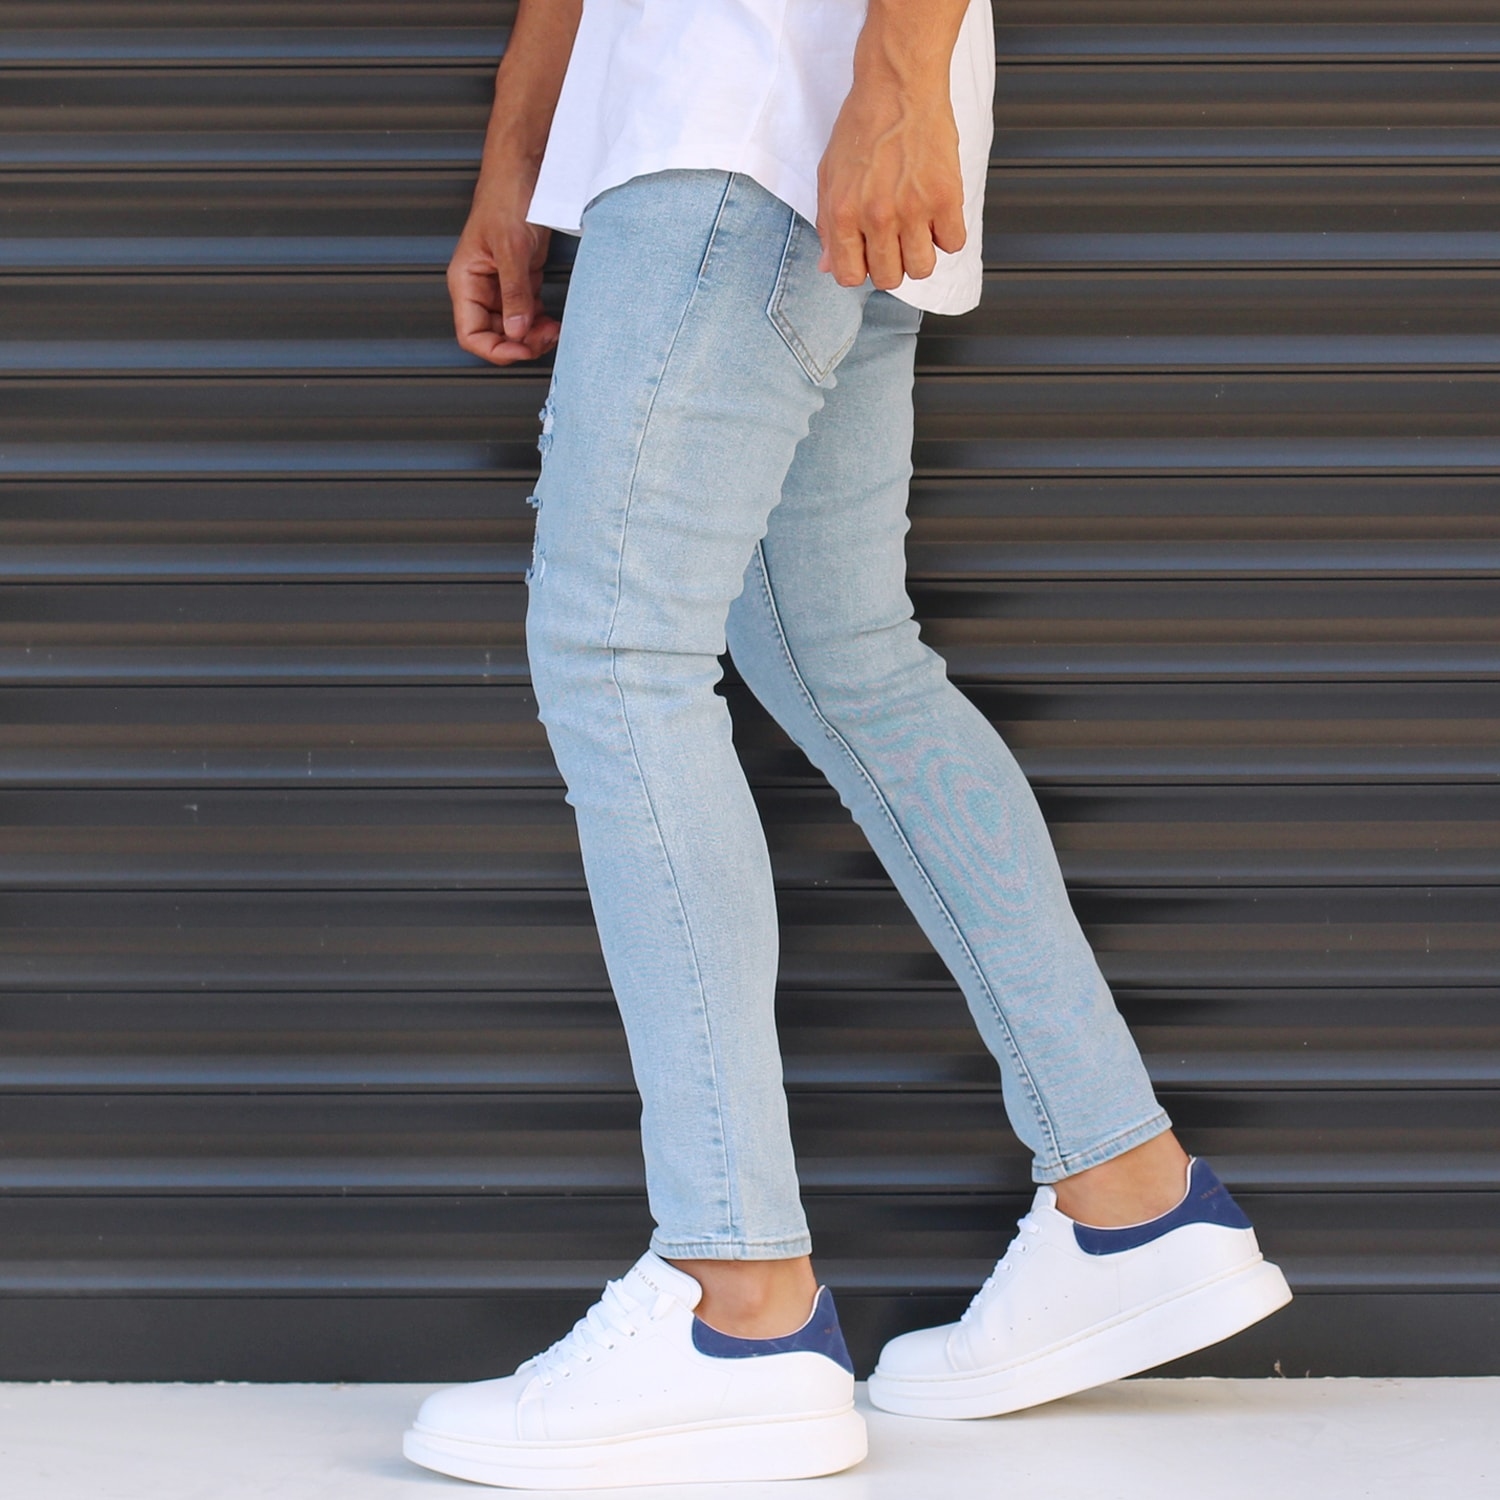 narrow pant jeans